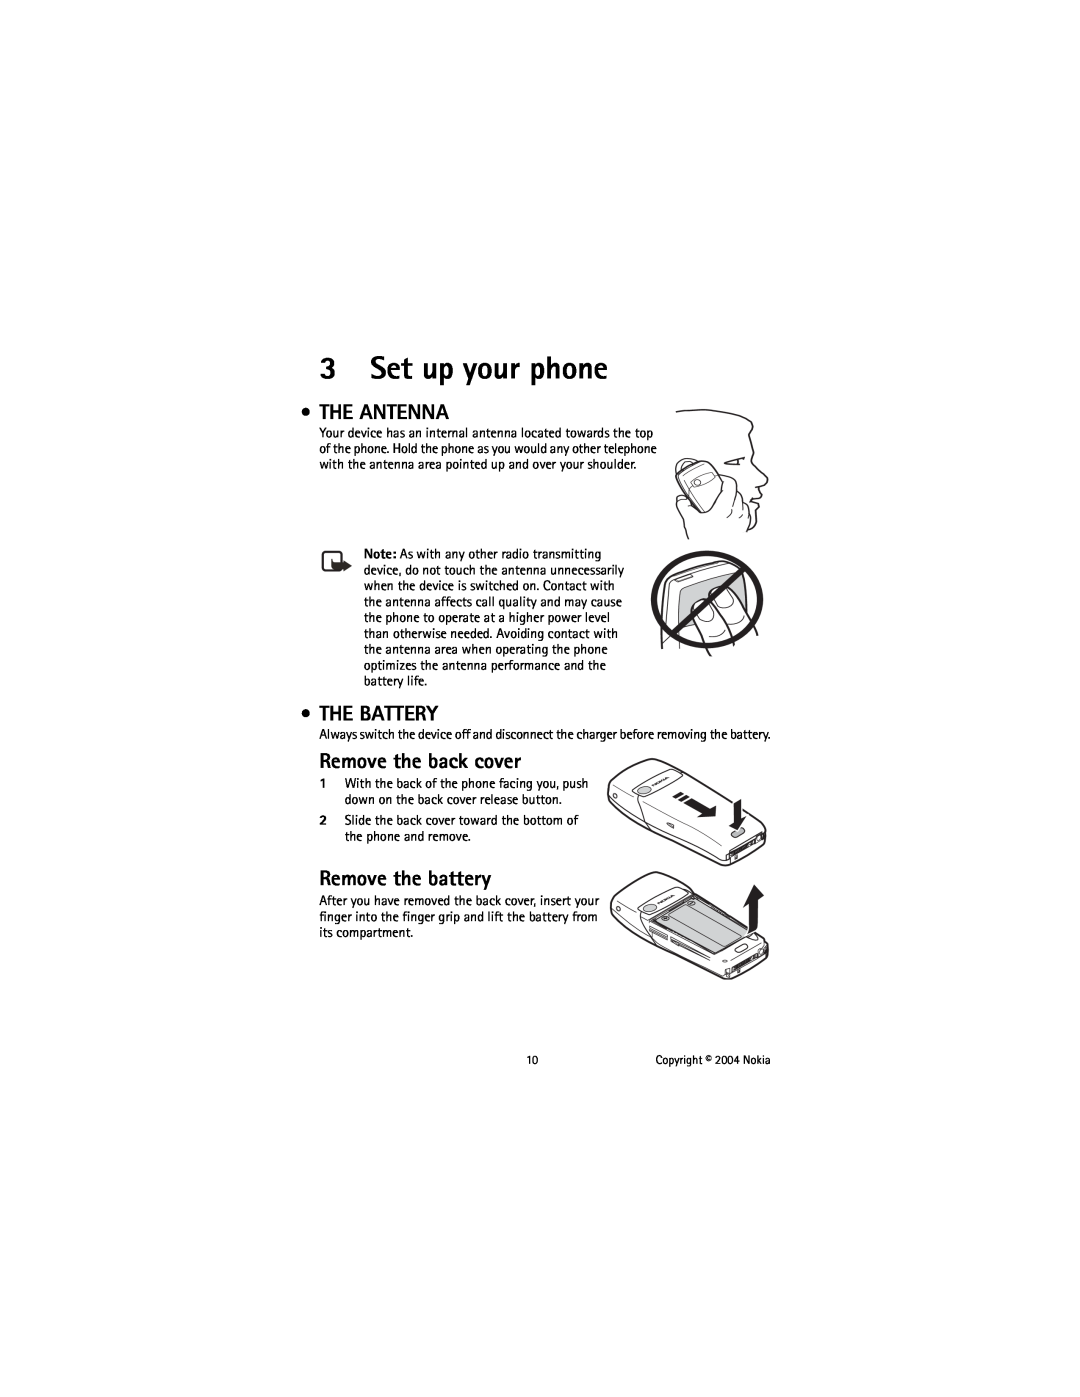 Nokia 6225 manual Set up your phone, The Antenna, The Battery, Remove the back cover, Remove the battery 